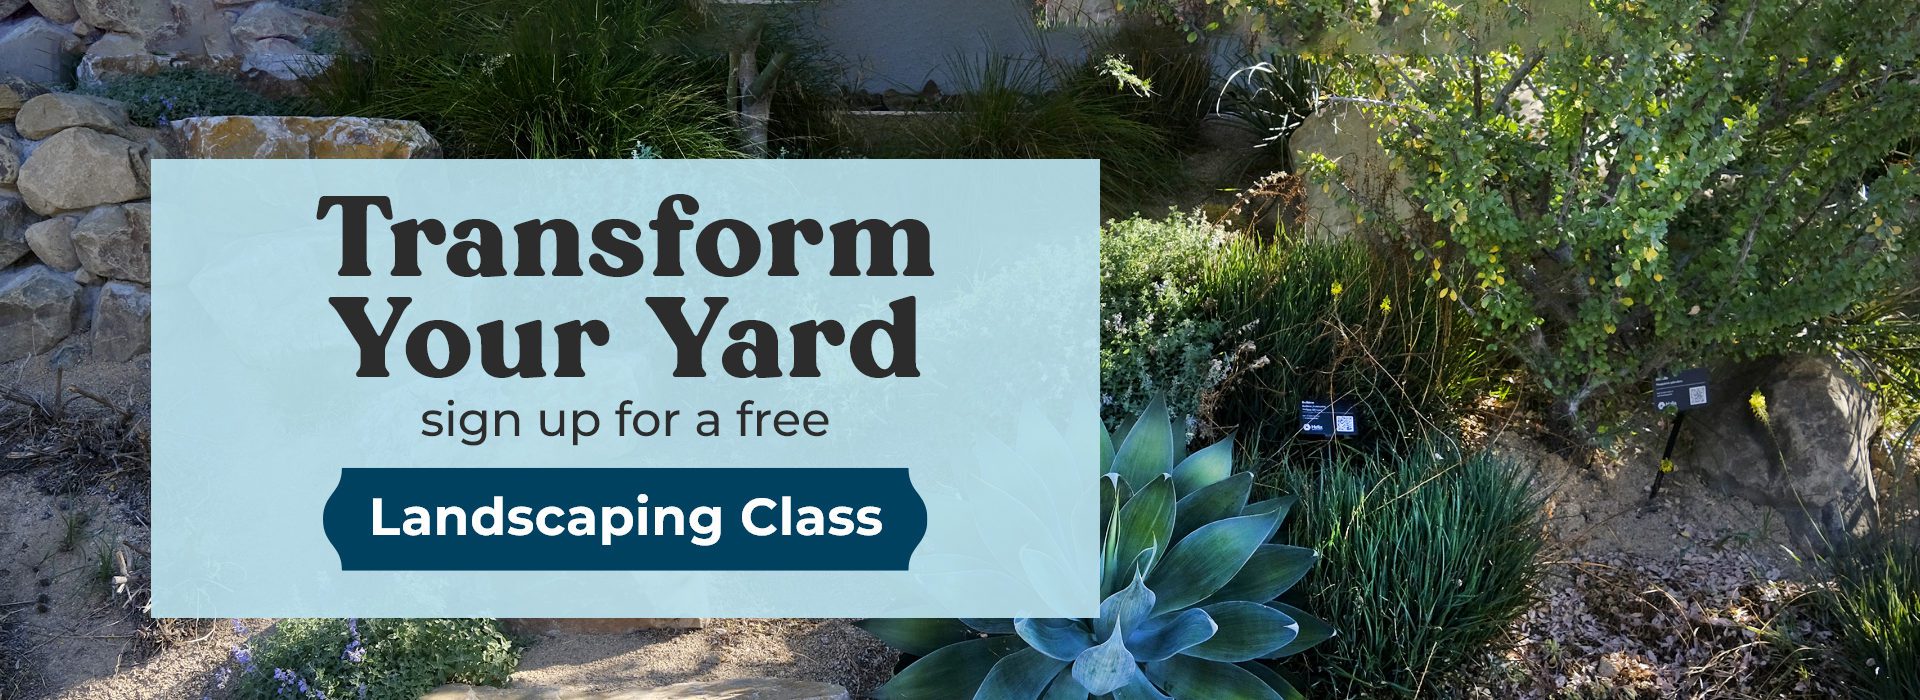 Transform Your Yard